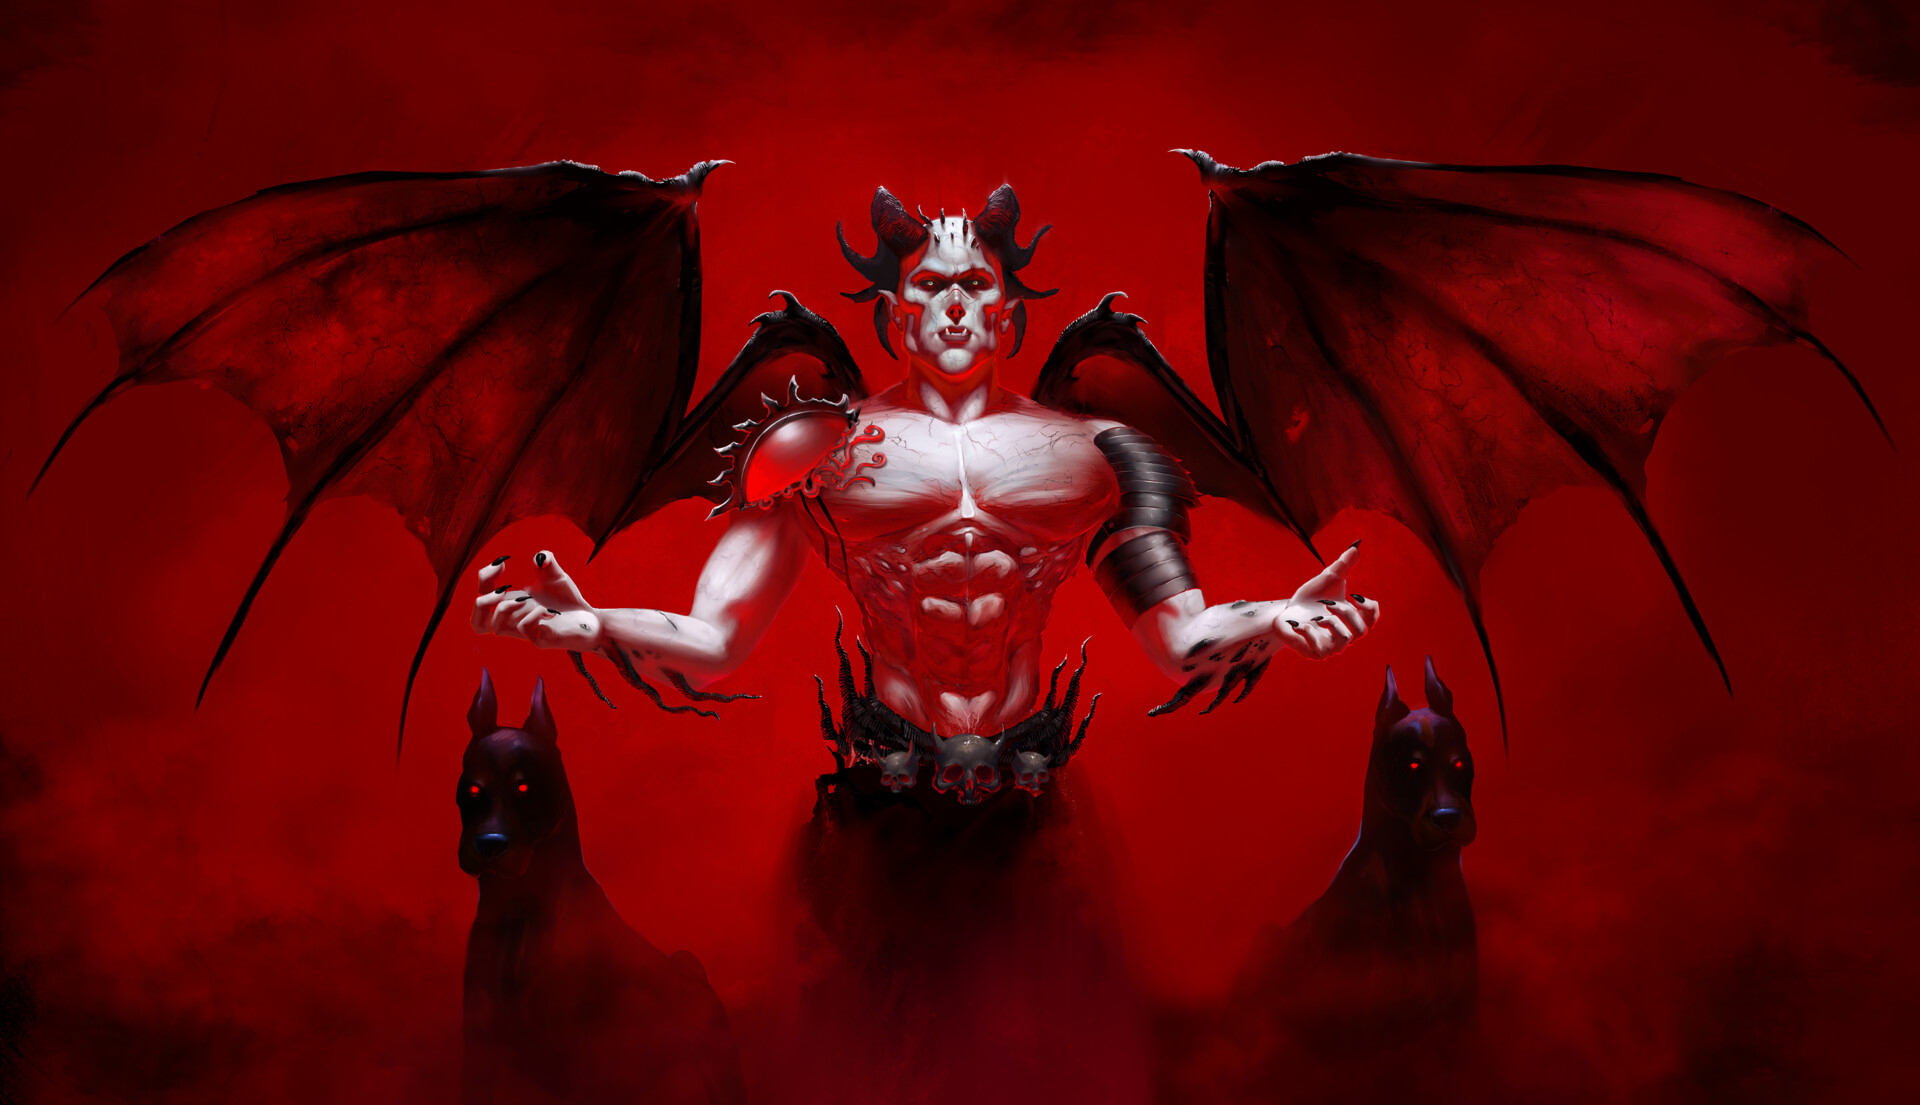 God of Hell HD Dark Demon Art Wallpaper, HD Artist 4K Wallpapers, Images  and Background - Wallpapers Den